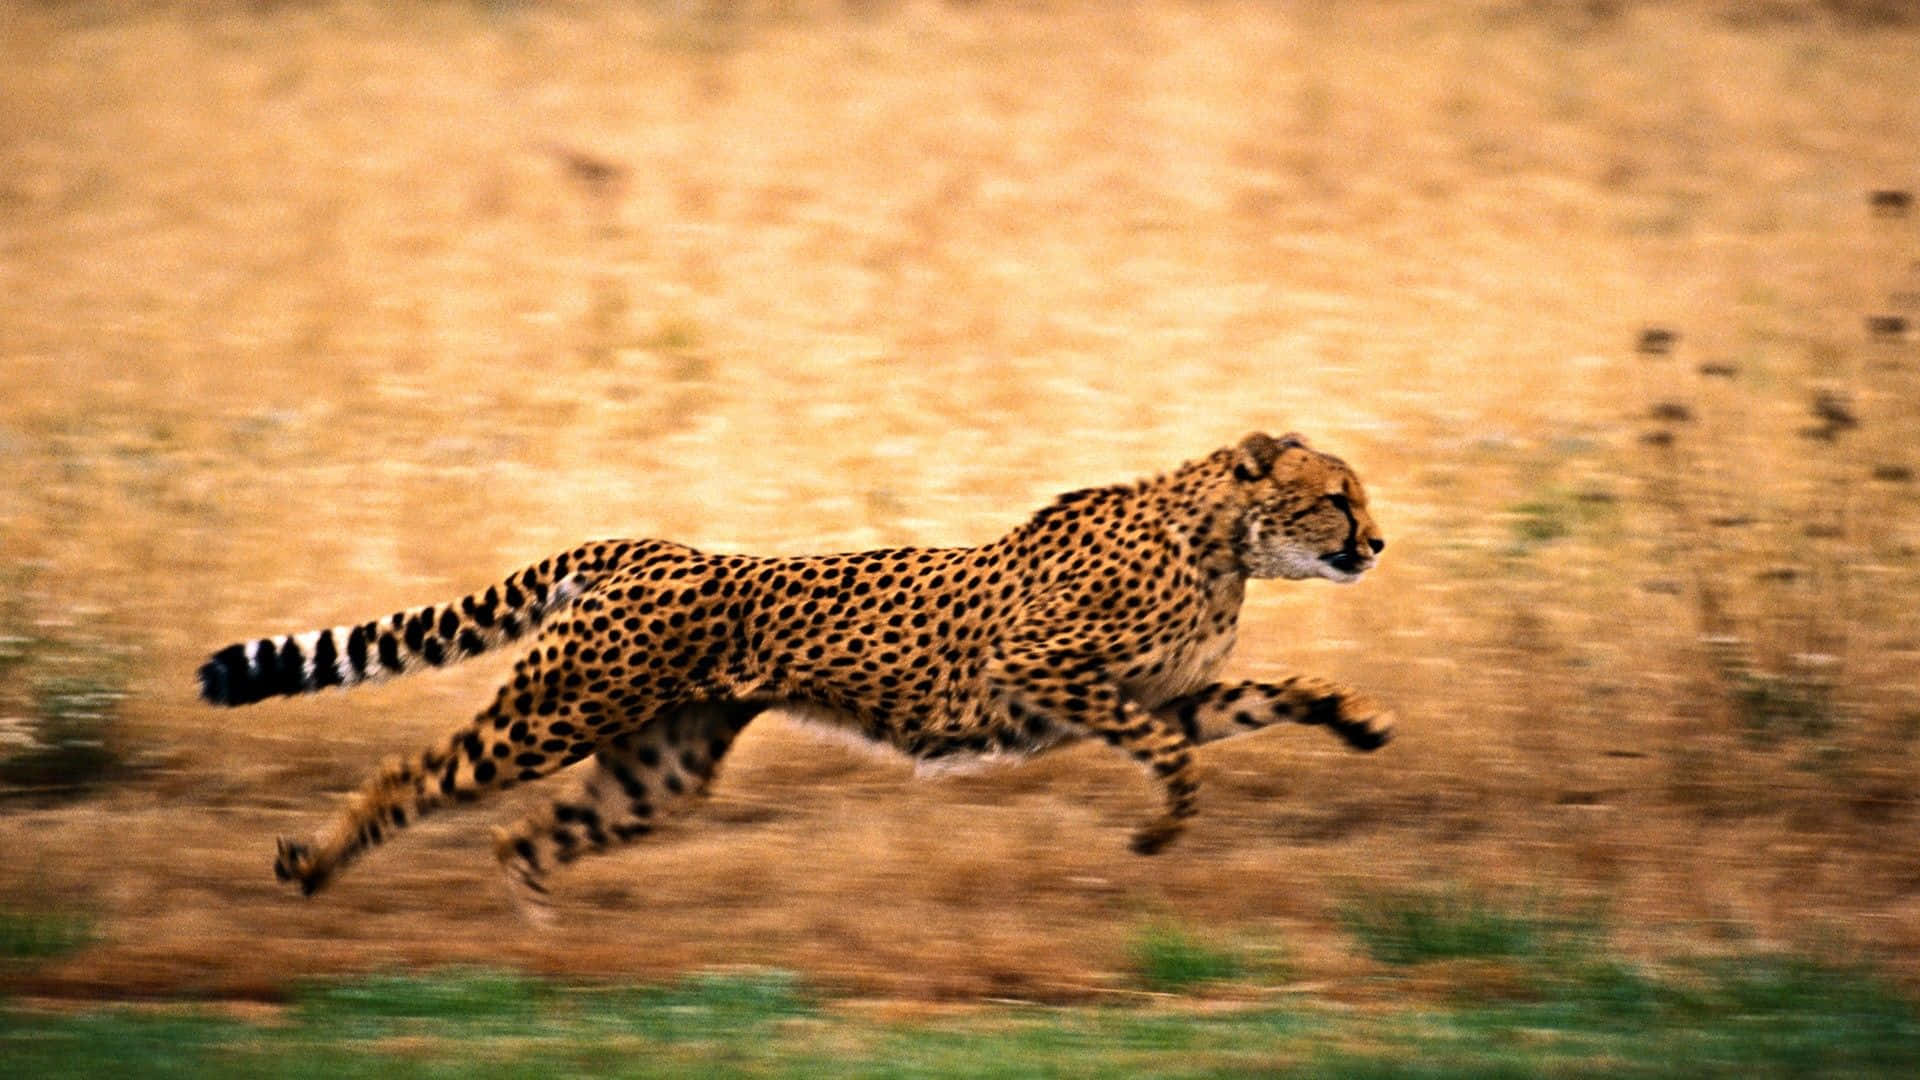 "Cheetah Speed"